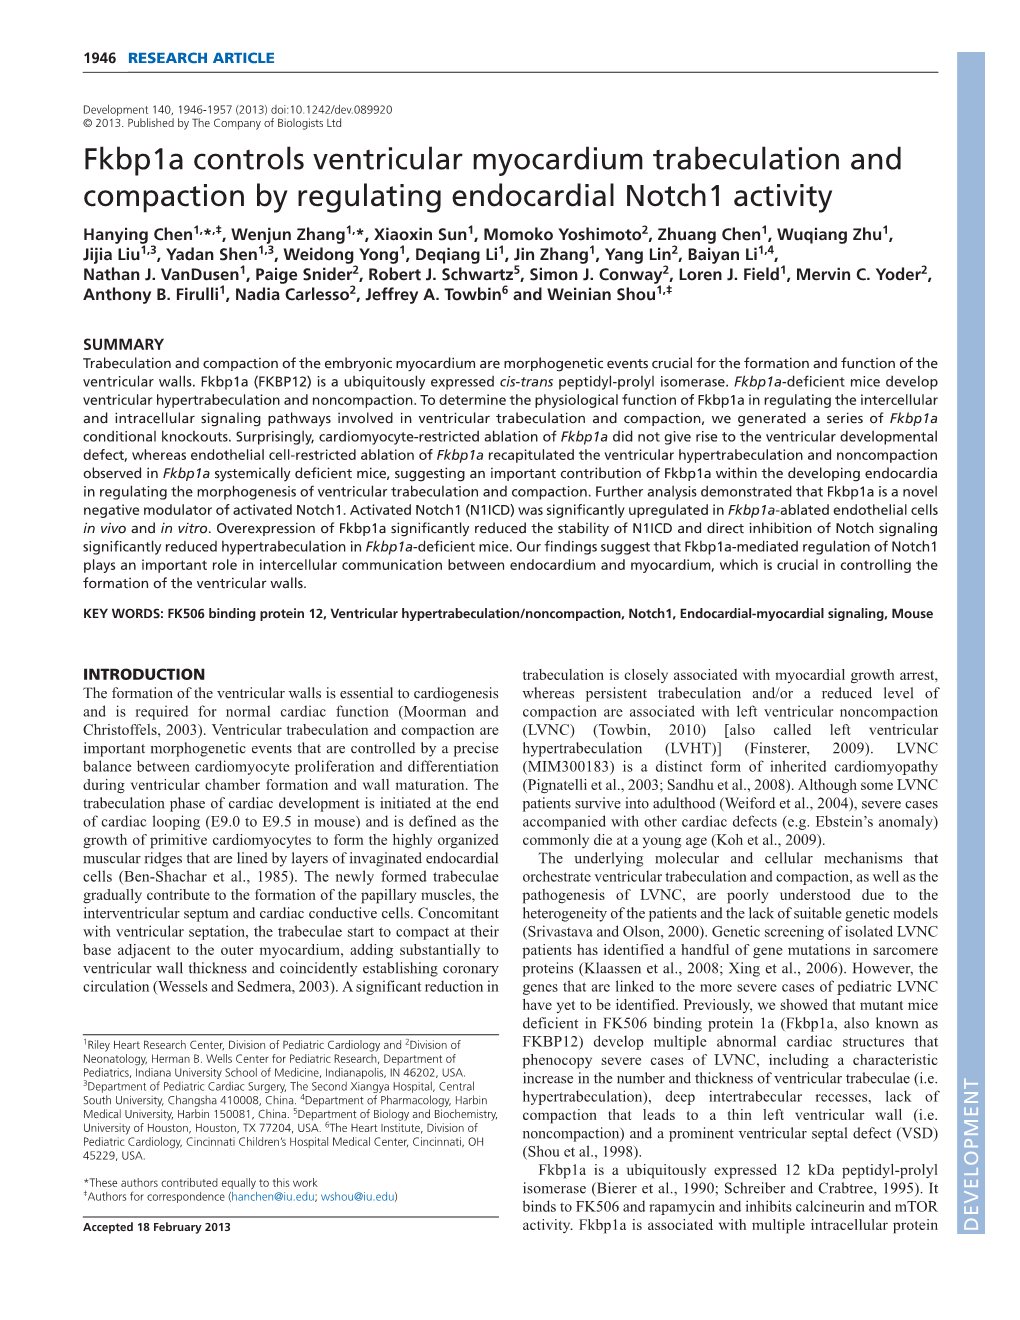 Fkbp1a Controls Ventricular Myocardium Trabeculation And